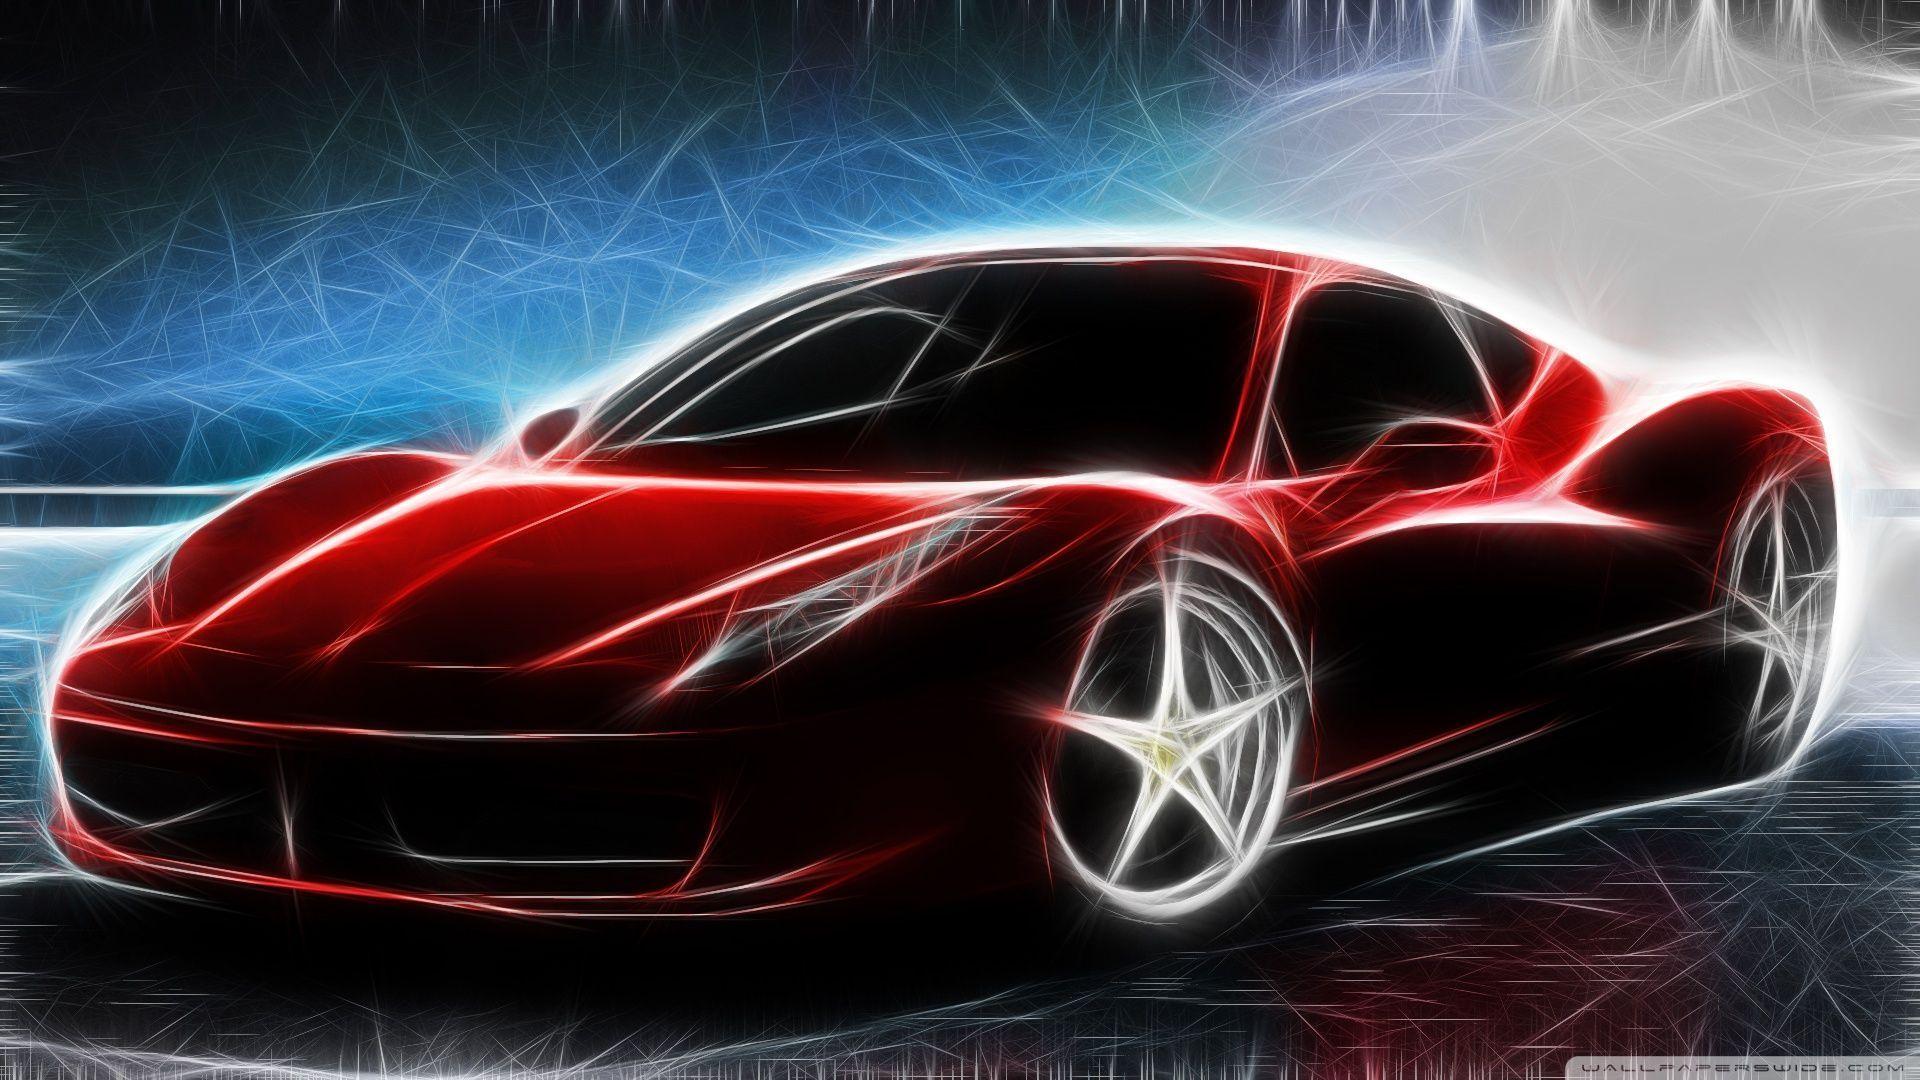 Coolest Collection of Ferrari 2015 Wallpaper. High Resolution Car